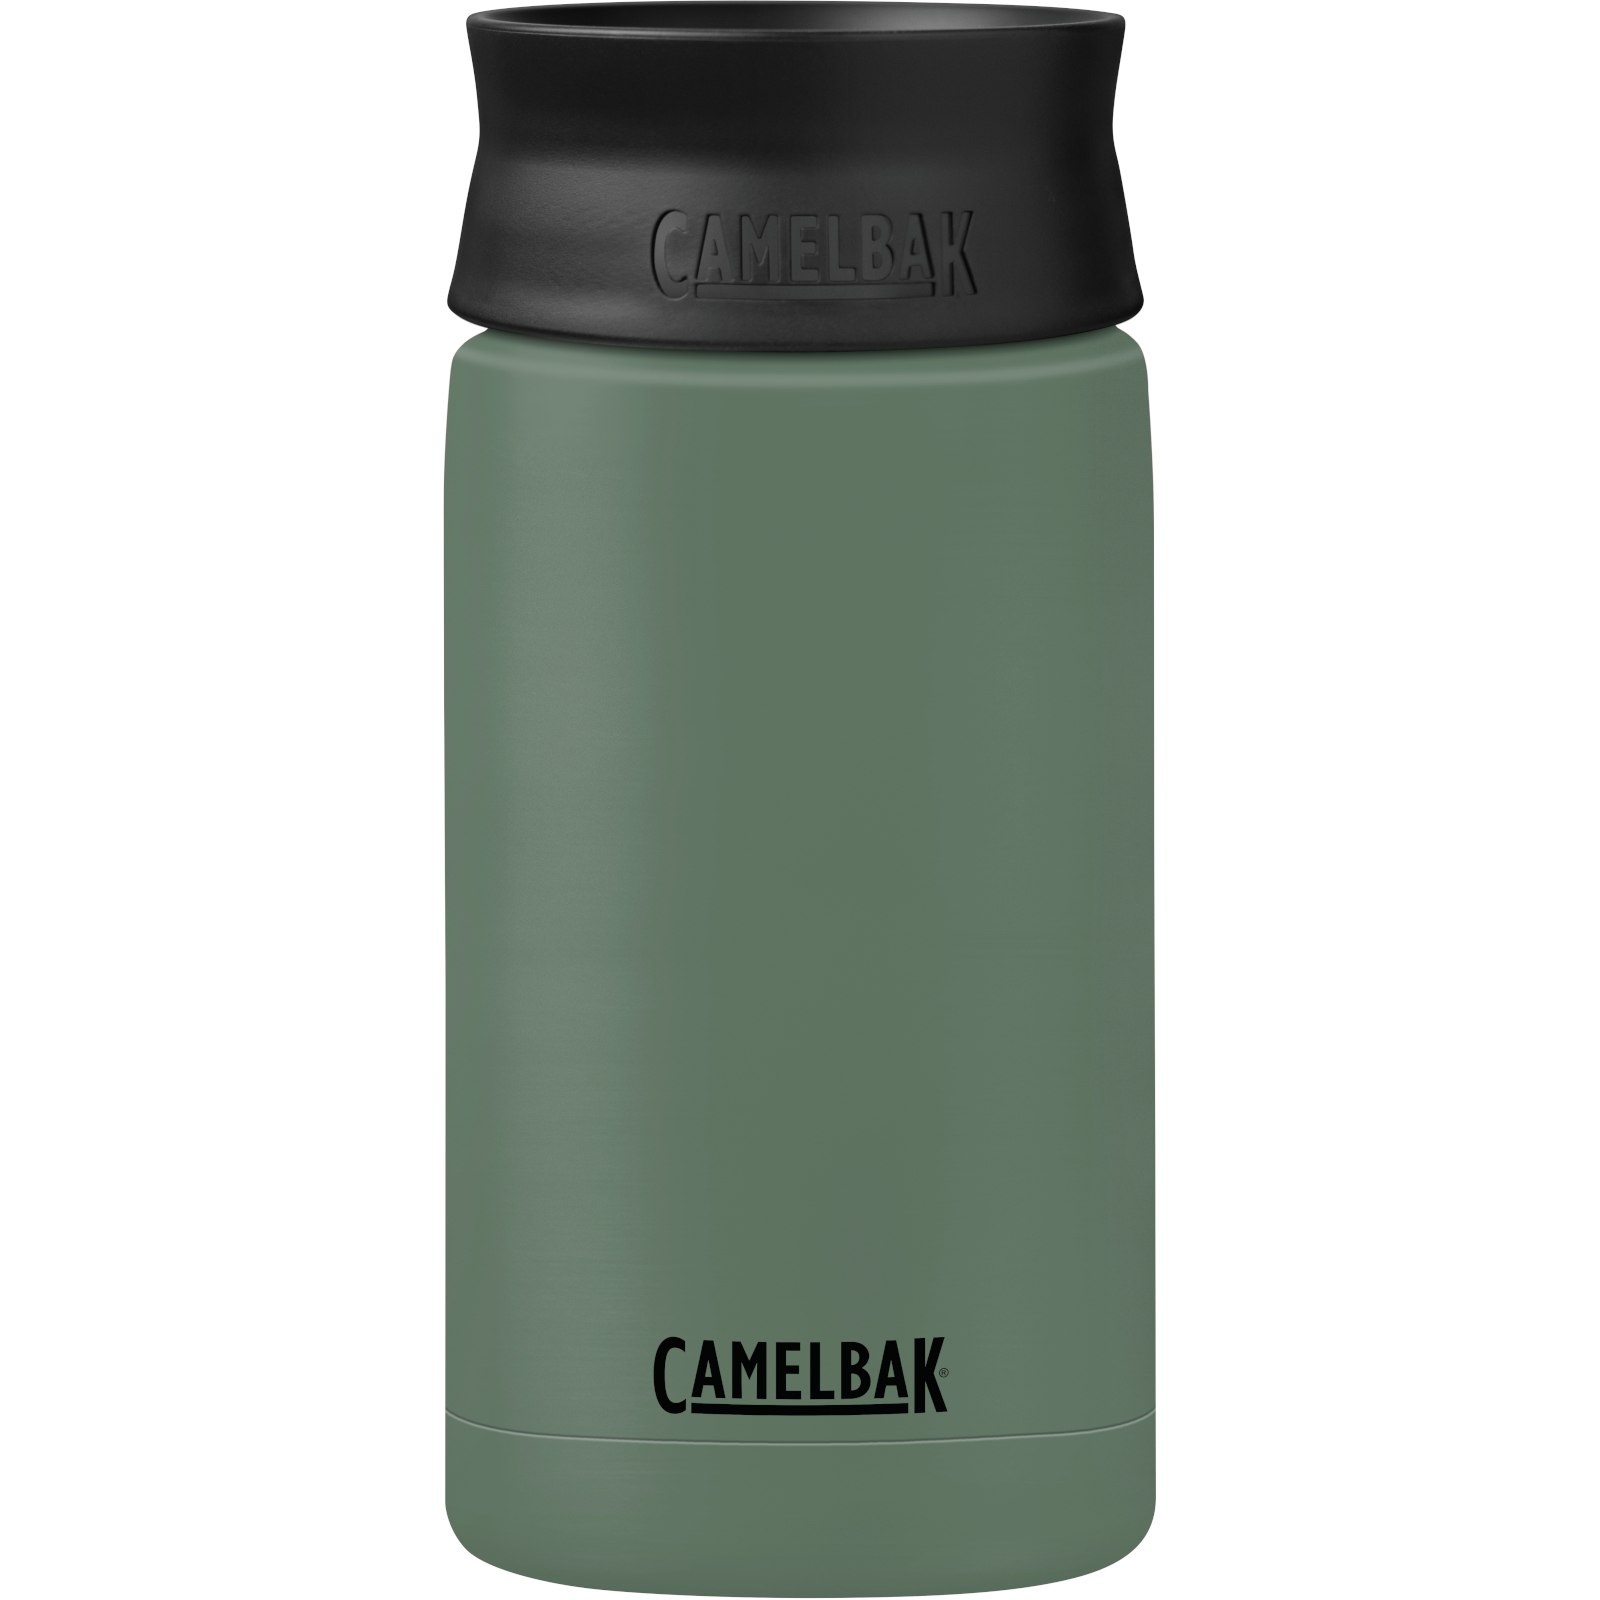 Productfoto van CamelBak Hot Cap Vacuum Insulated Stainless Bottle 350ml - Moss